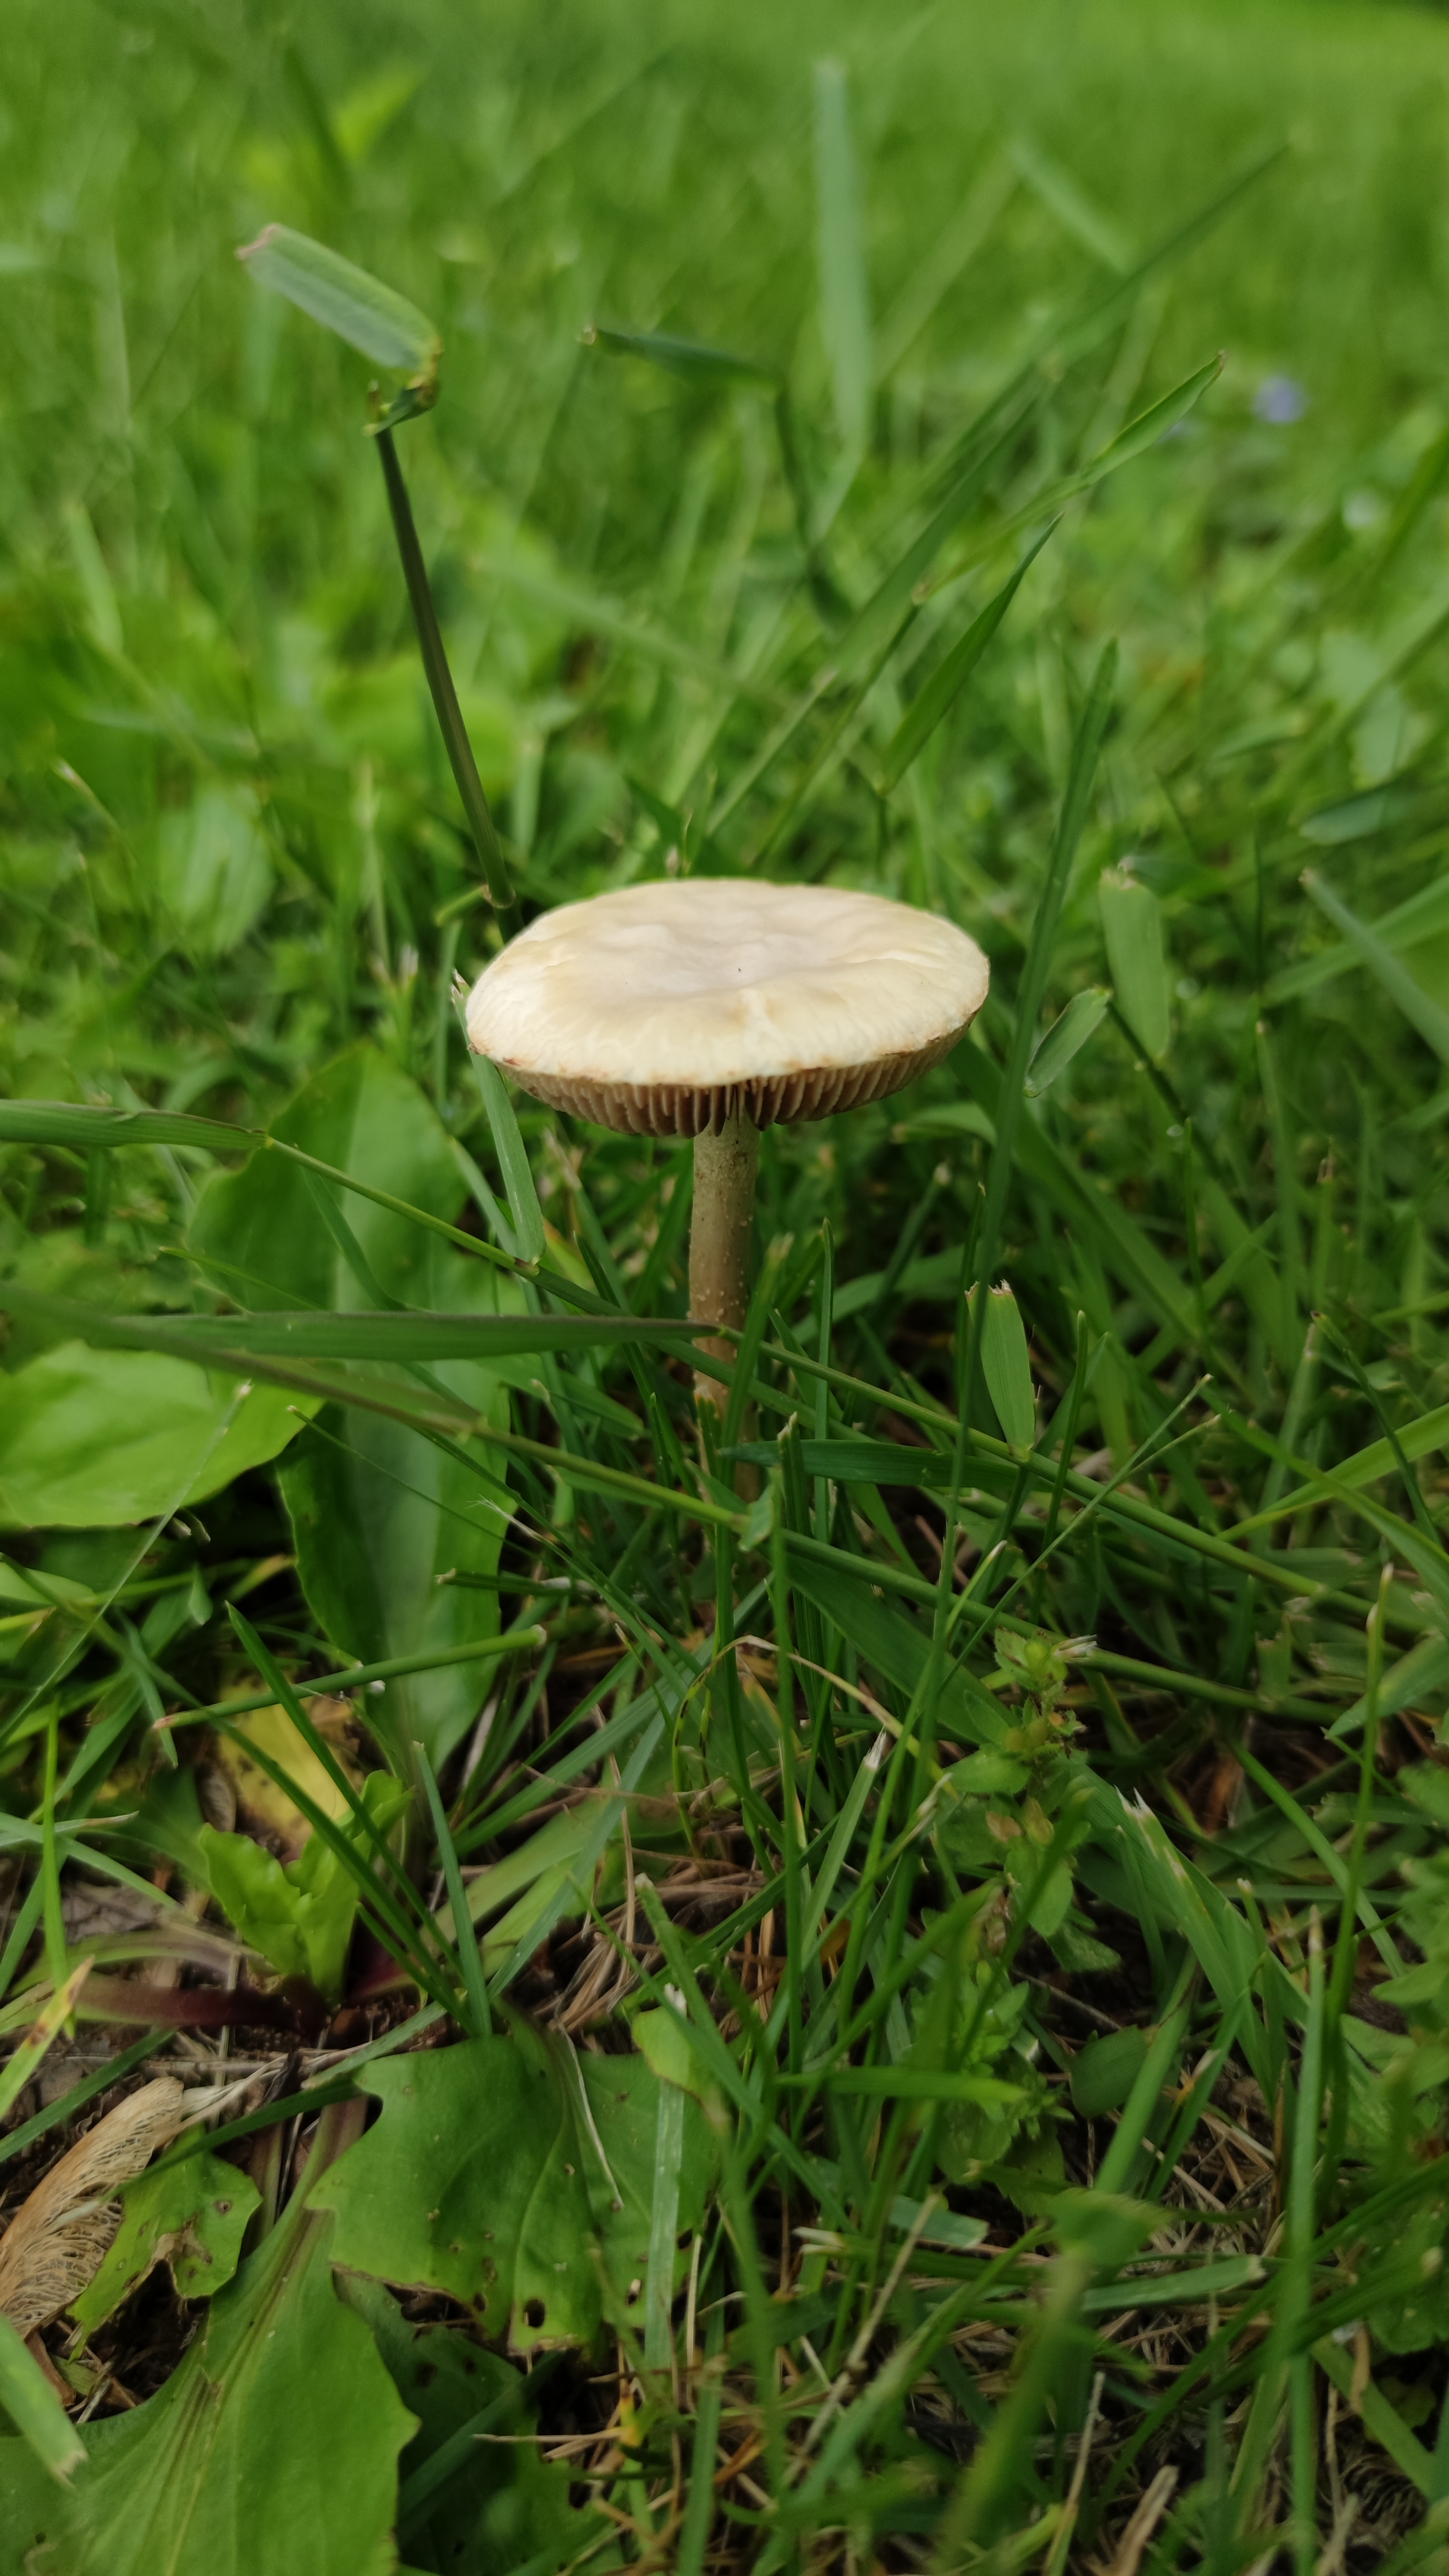 lydia-fox-nature-mushroom-photo